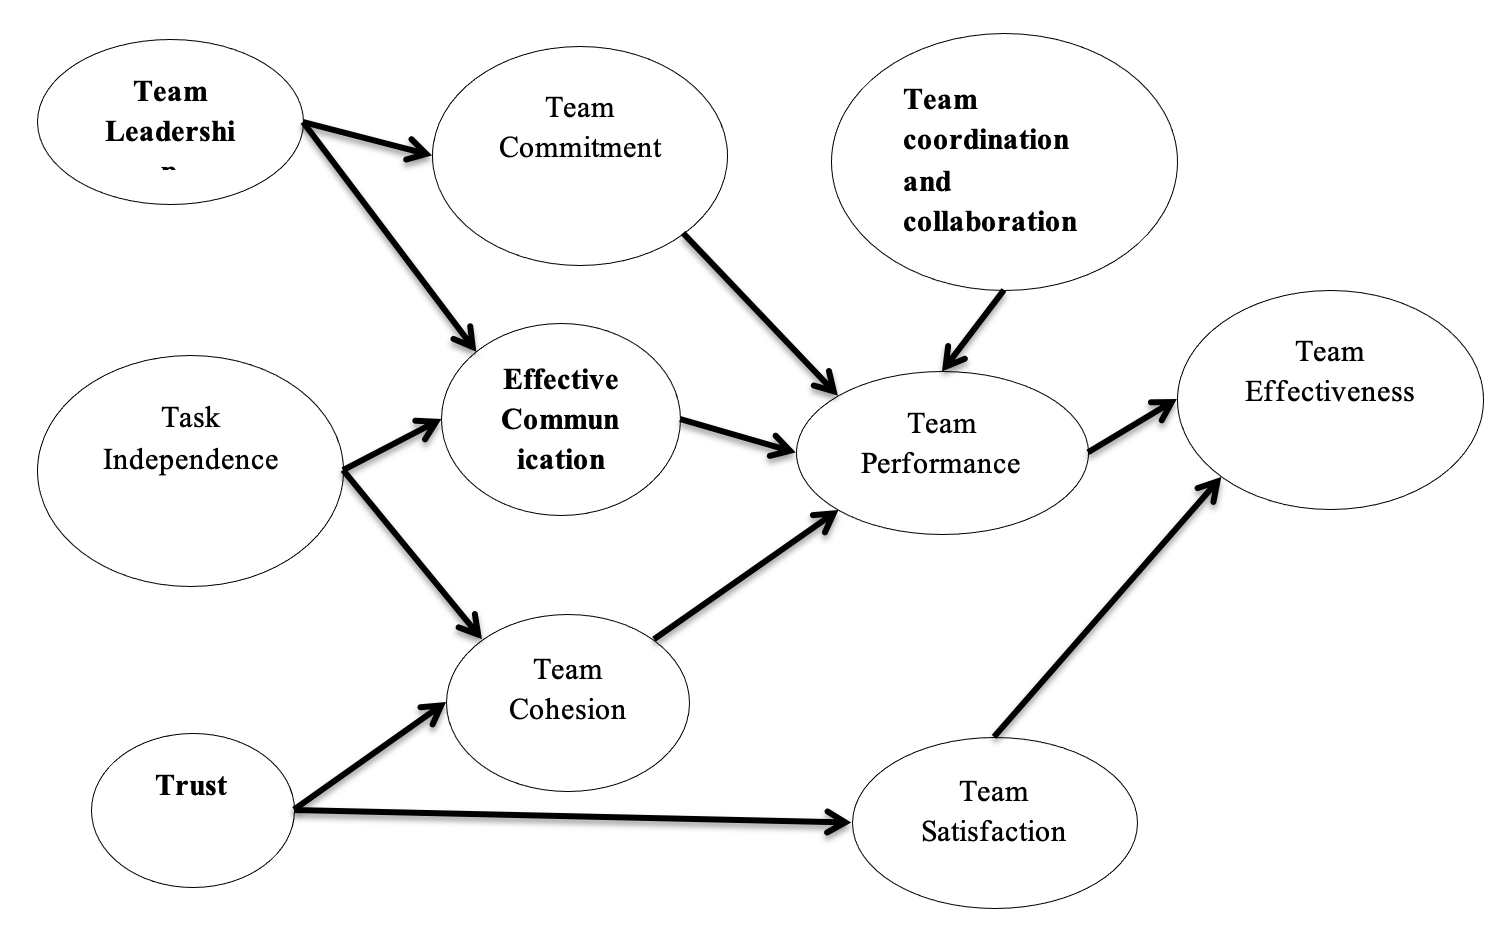 Figure 1: Conceptual Model of Communication